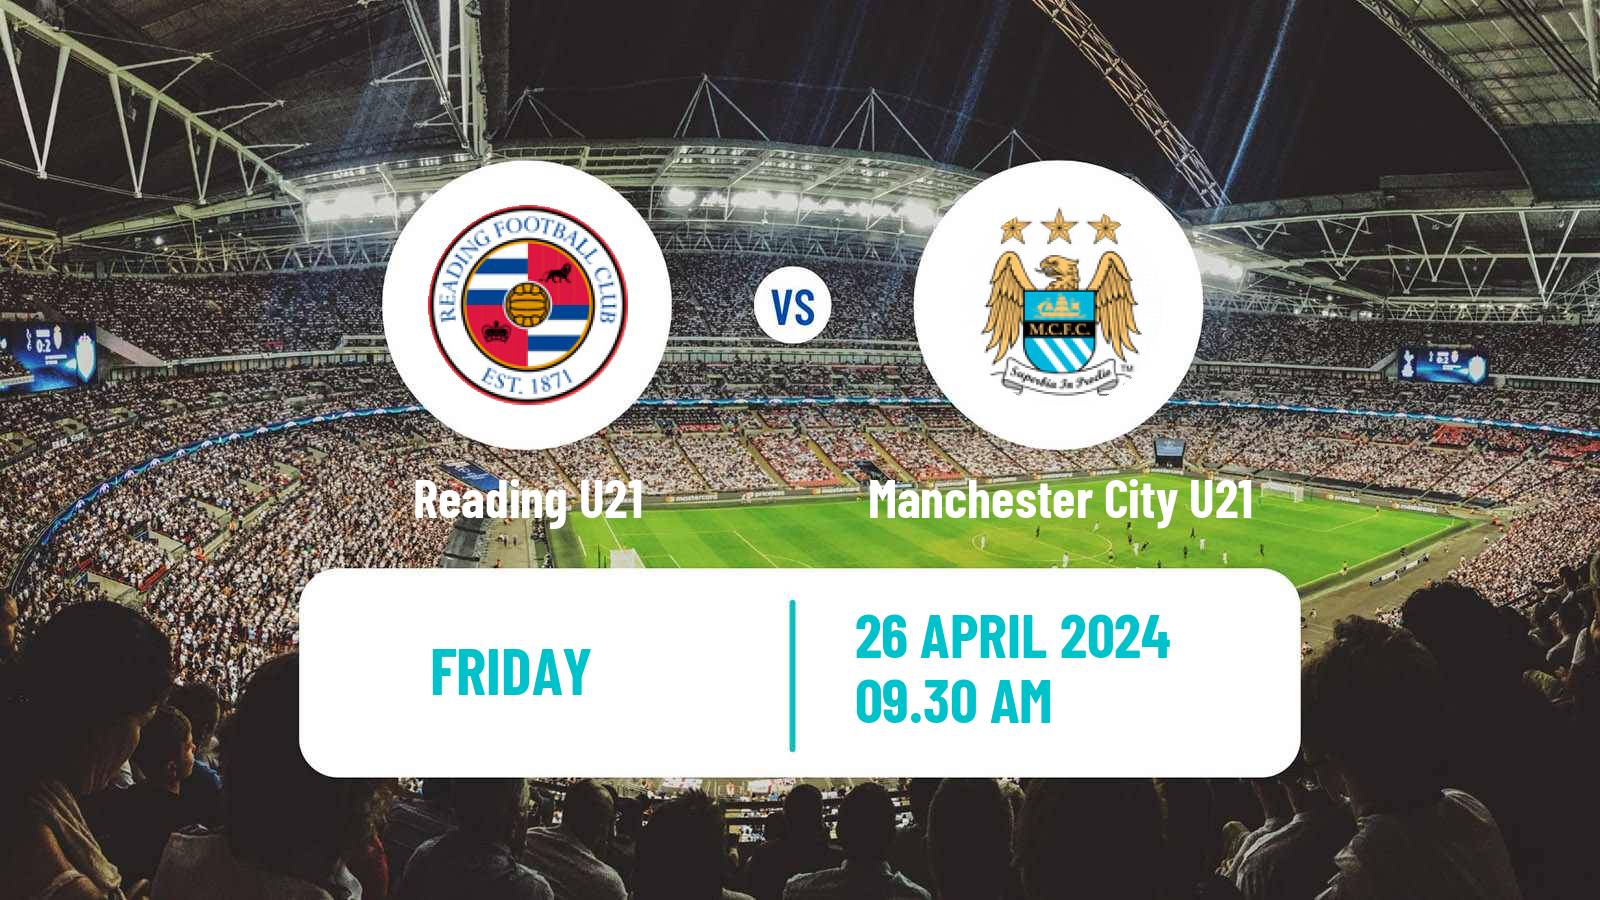 Soccer English Premier League 2 Reading U21 - Manchester City U21